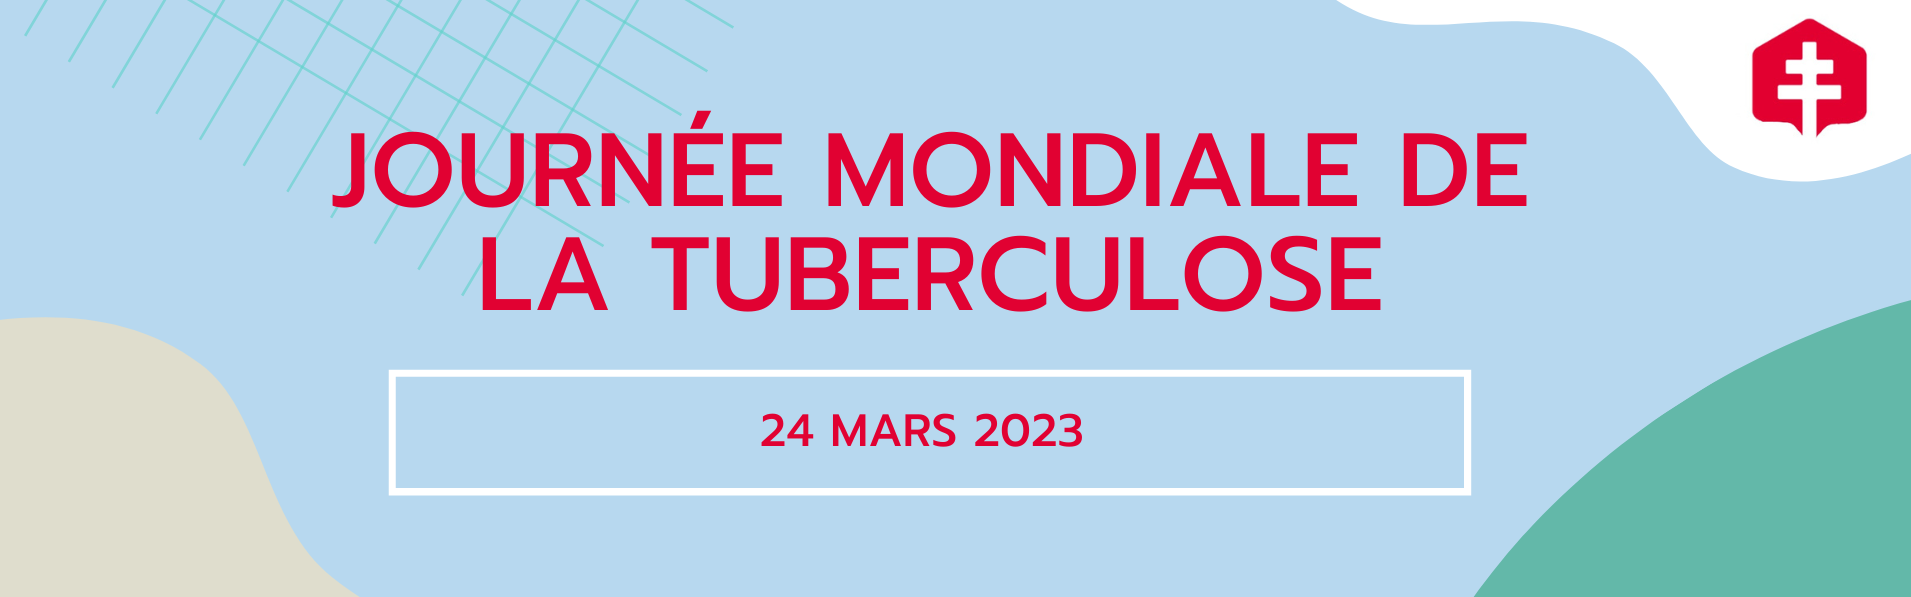 Journée mondiale de la tuberculose